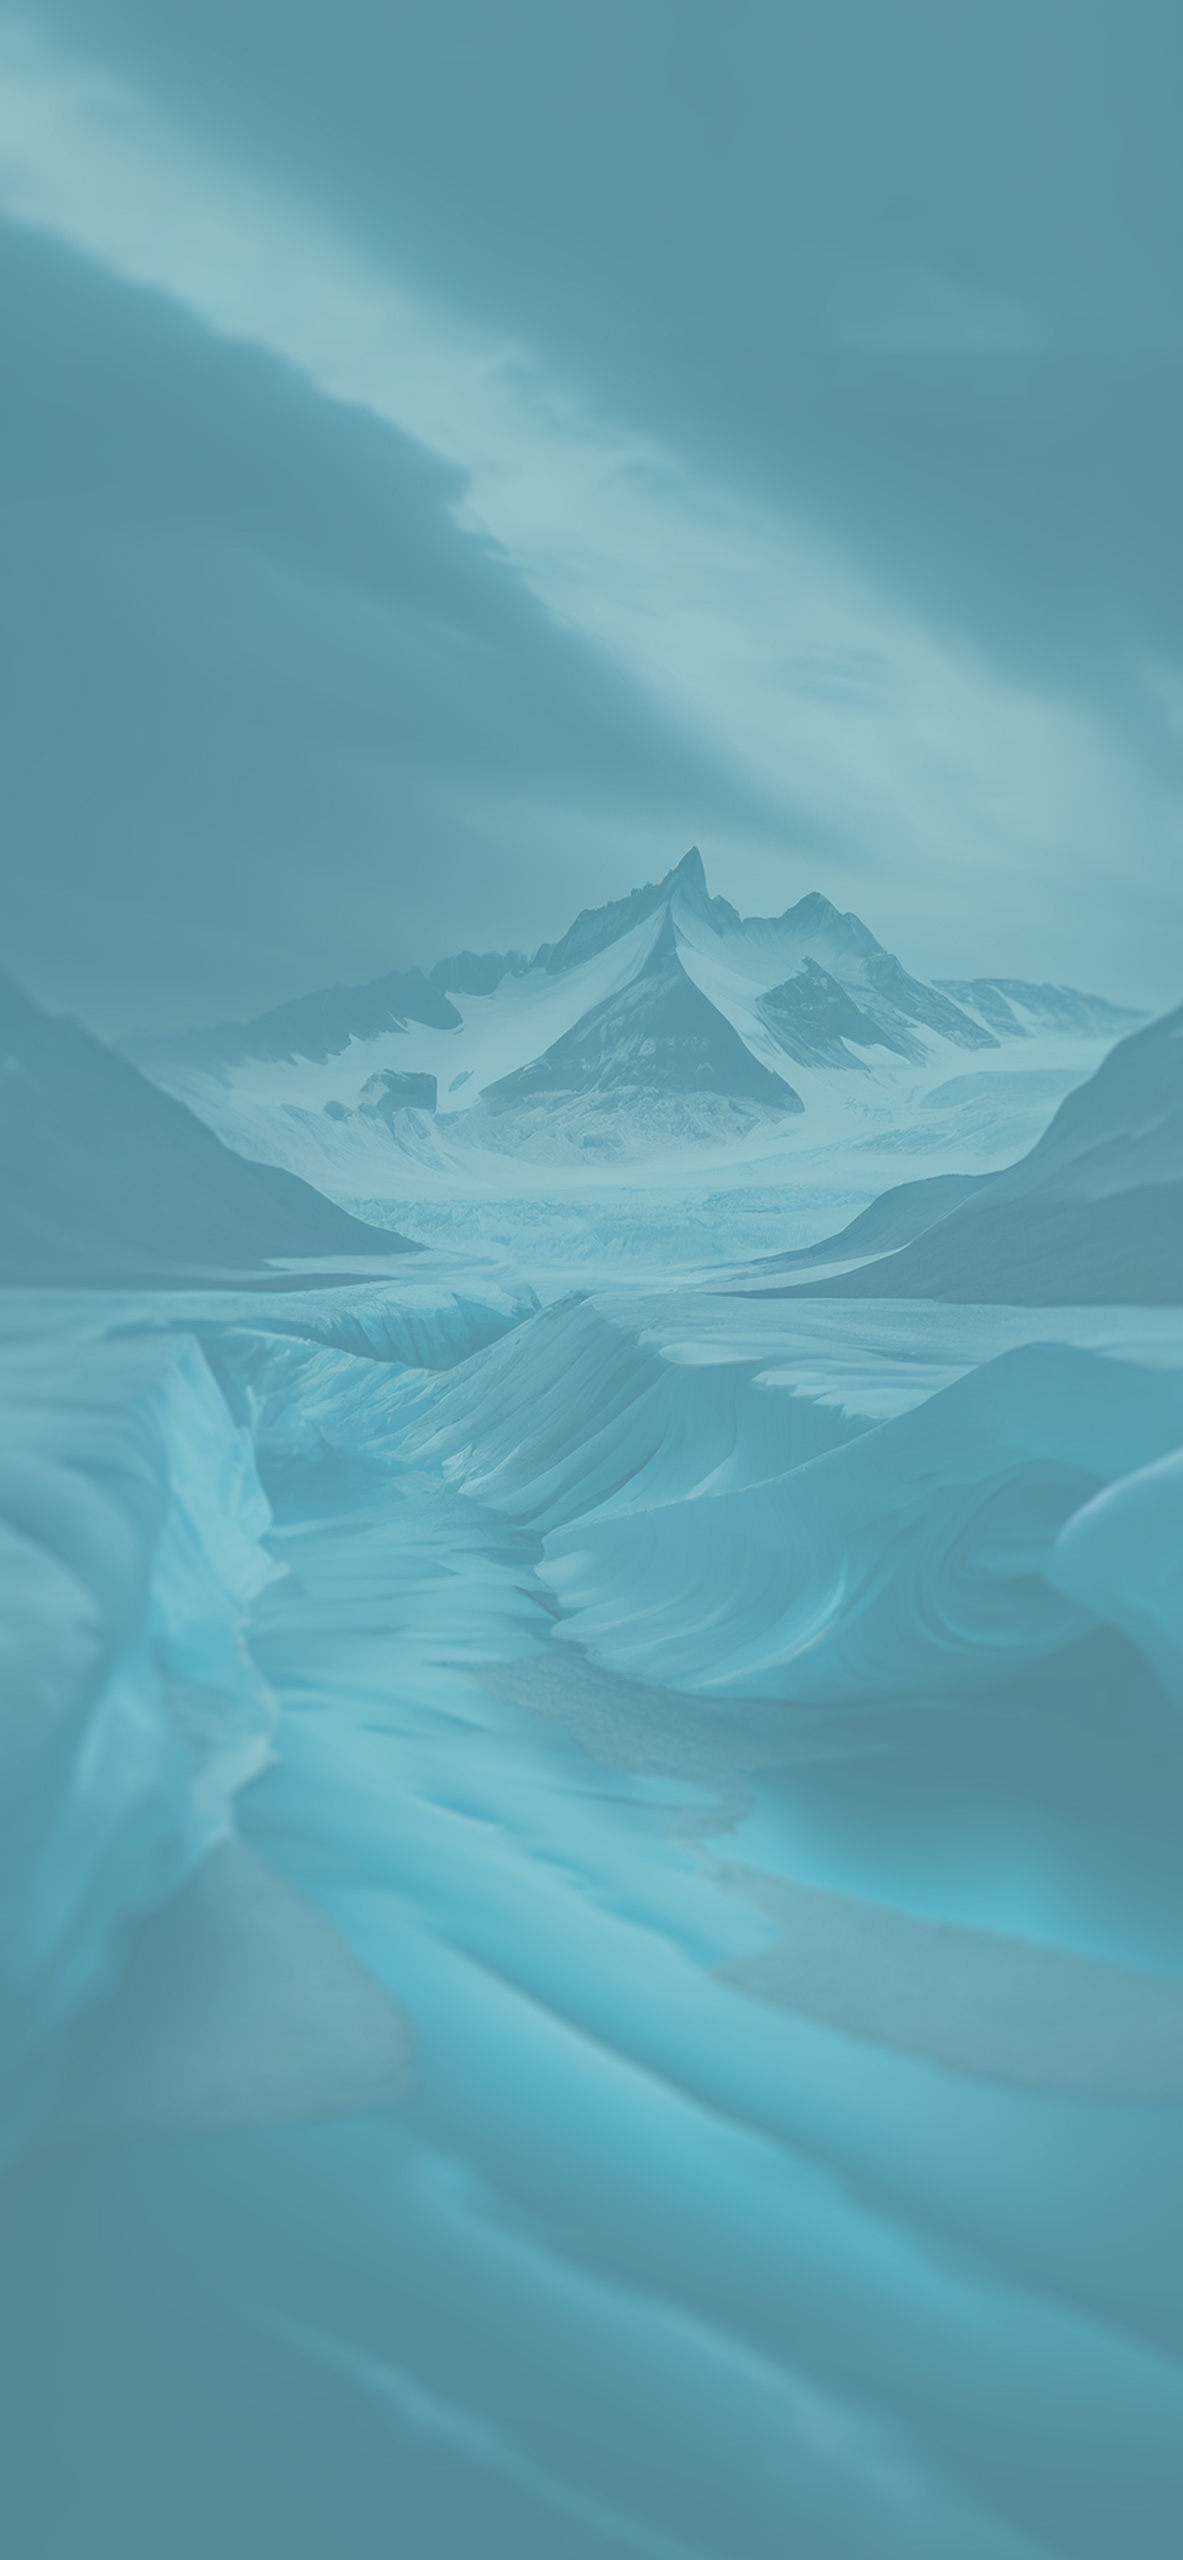 glacier aesthetic background